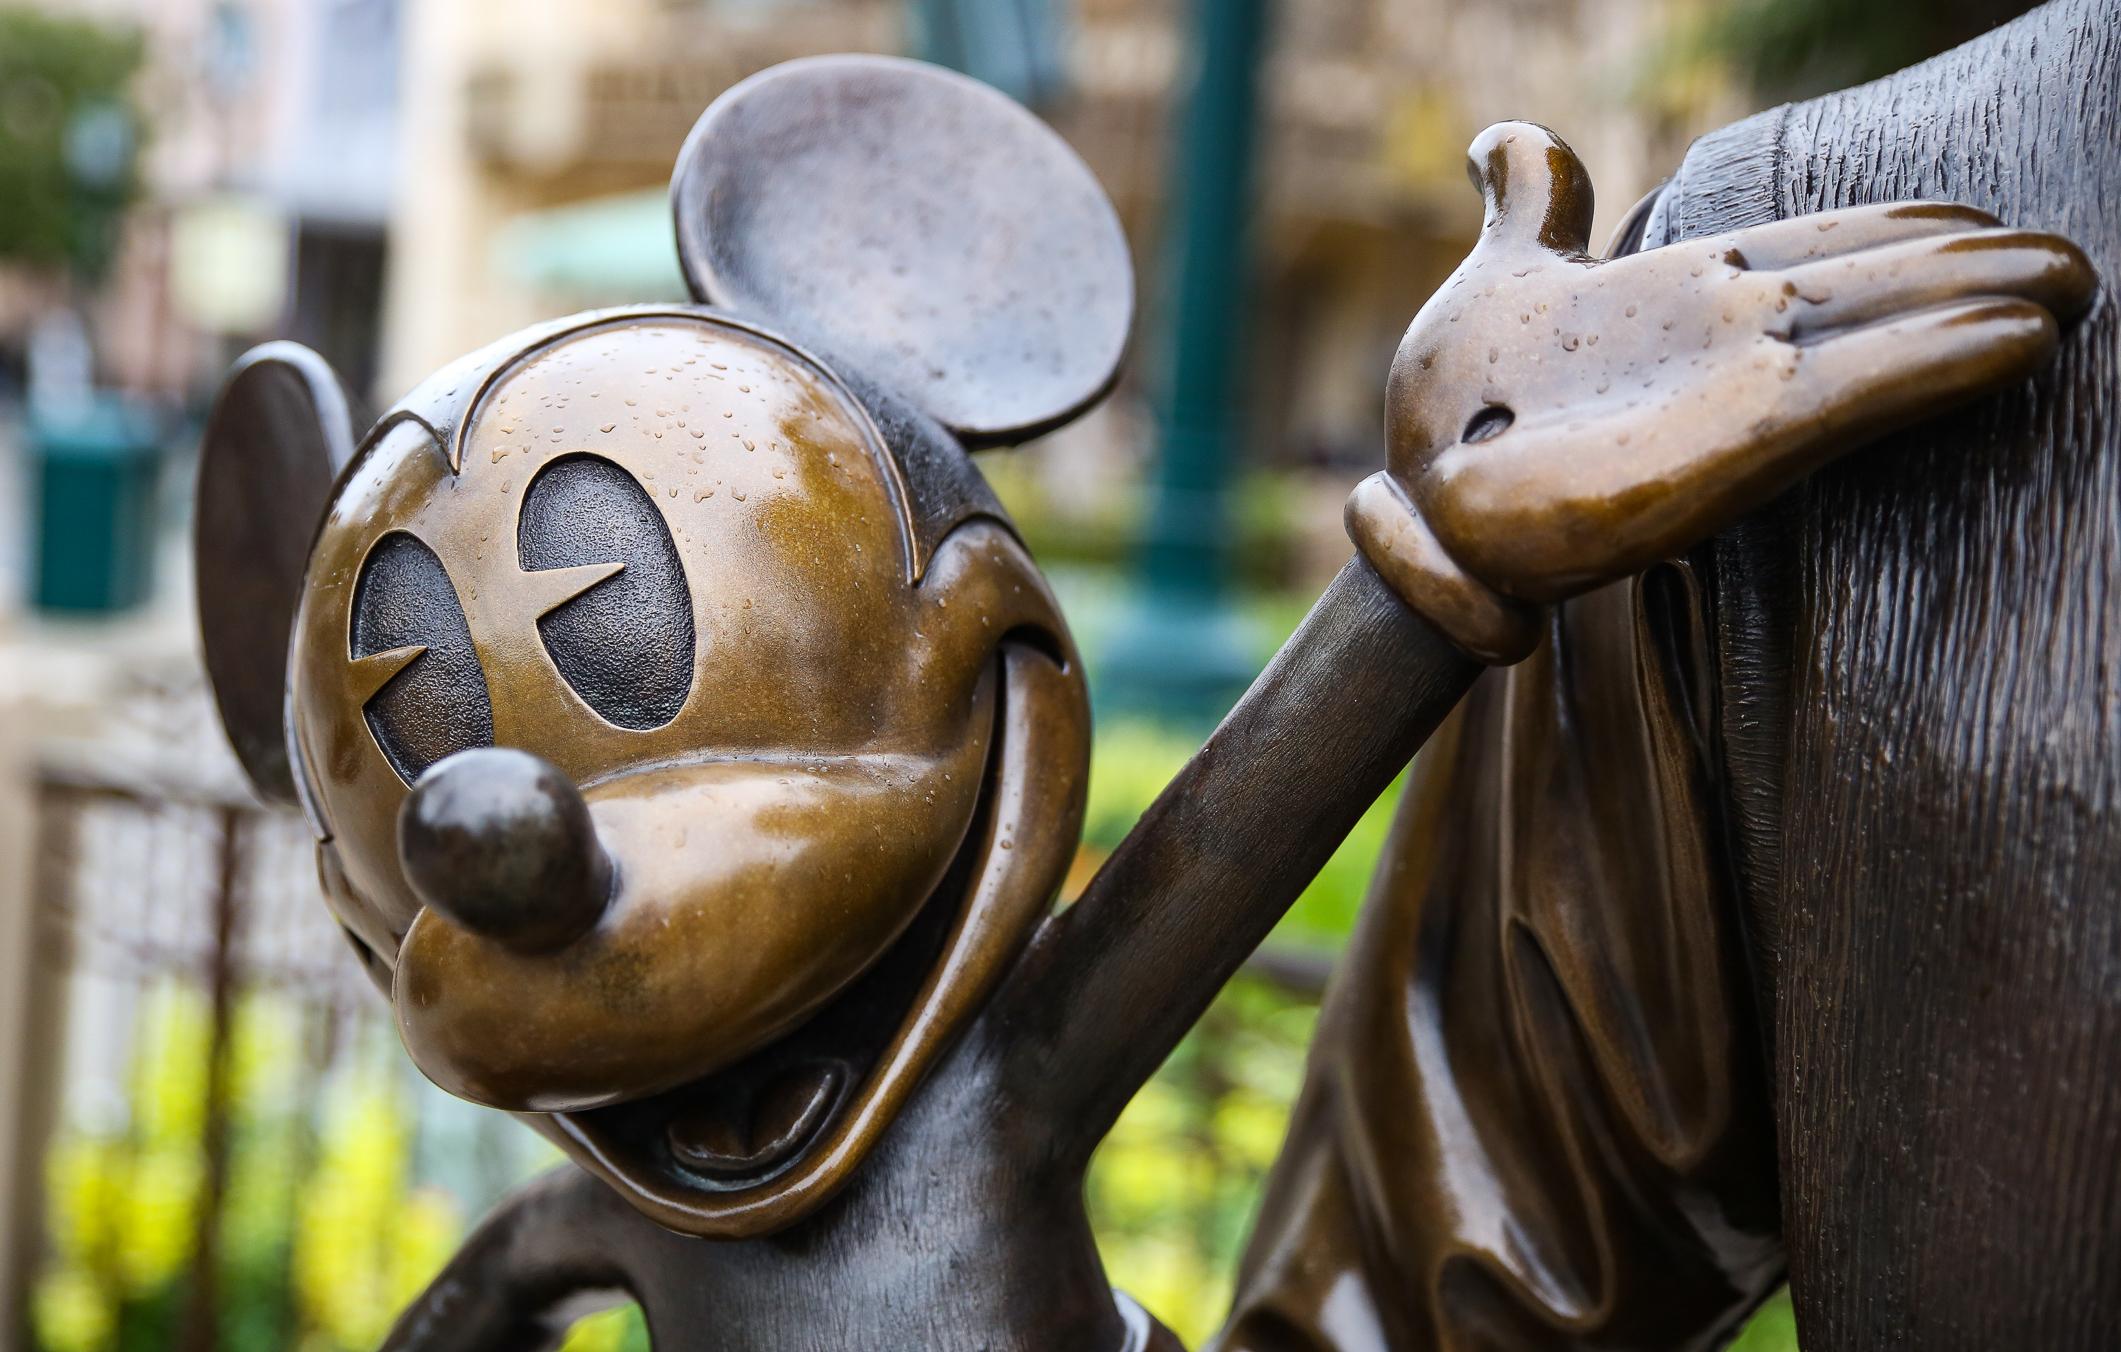 Anaheim Approves California Disneyland’s $1.9 Billion Expansion Plans